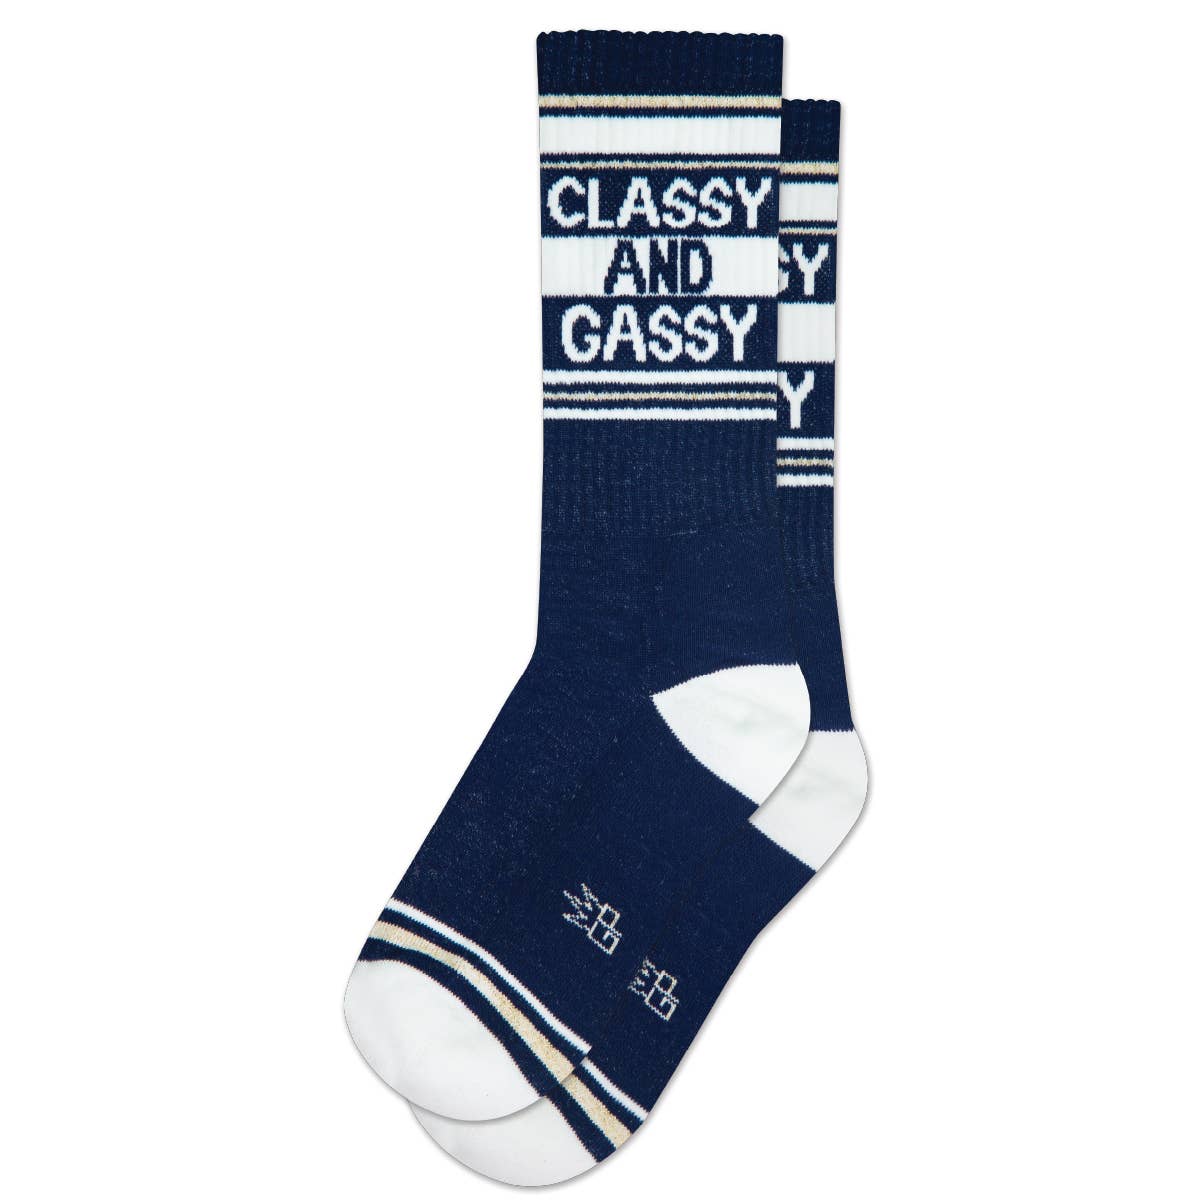 Classy And Gassy Gym Crew Socks